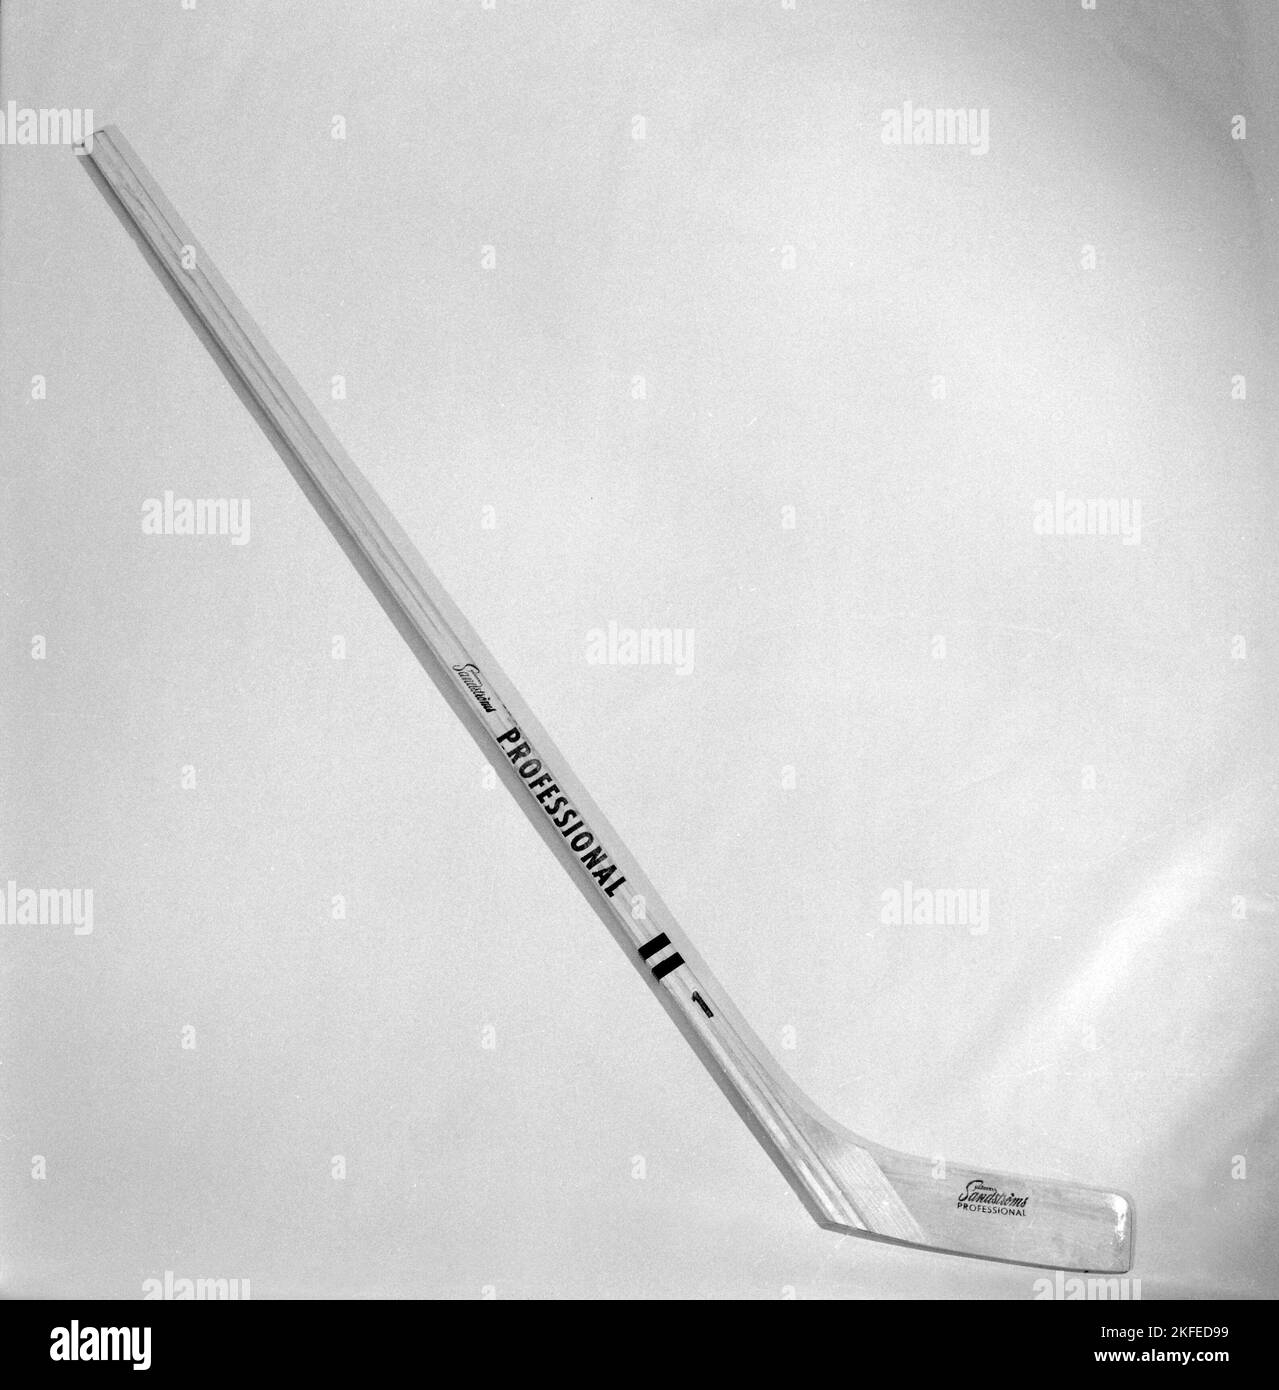 equipment hockey stick game pixel art vector illustration Stock Vector  Image & Art - Alamy